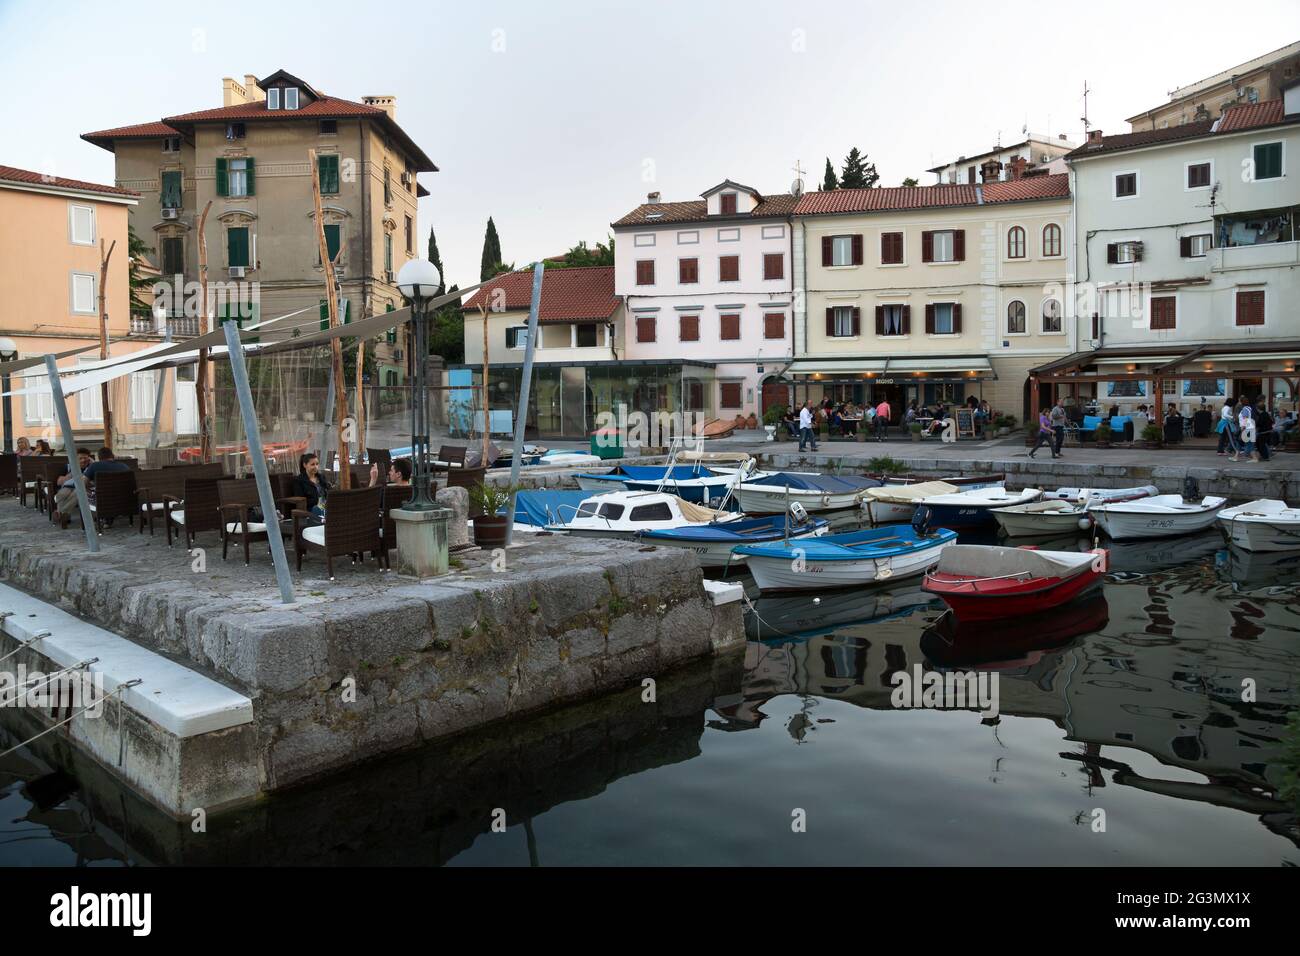 '21.05.2016, Volosko, Istria, Croatia - Restaurant at the harbour of the fishing village Volosko at the Adriatic Sea (Kvarner Bay). 00A160521D352CAROE Stock Photo